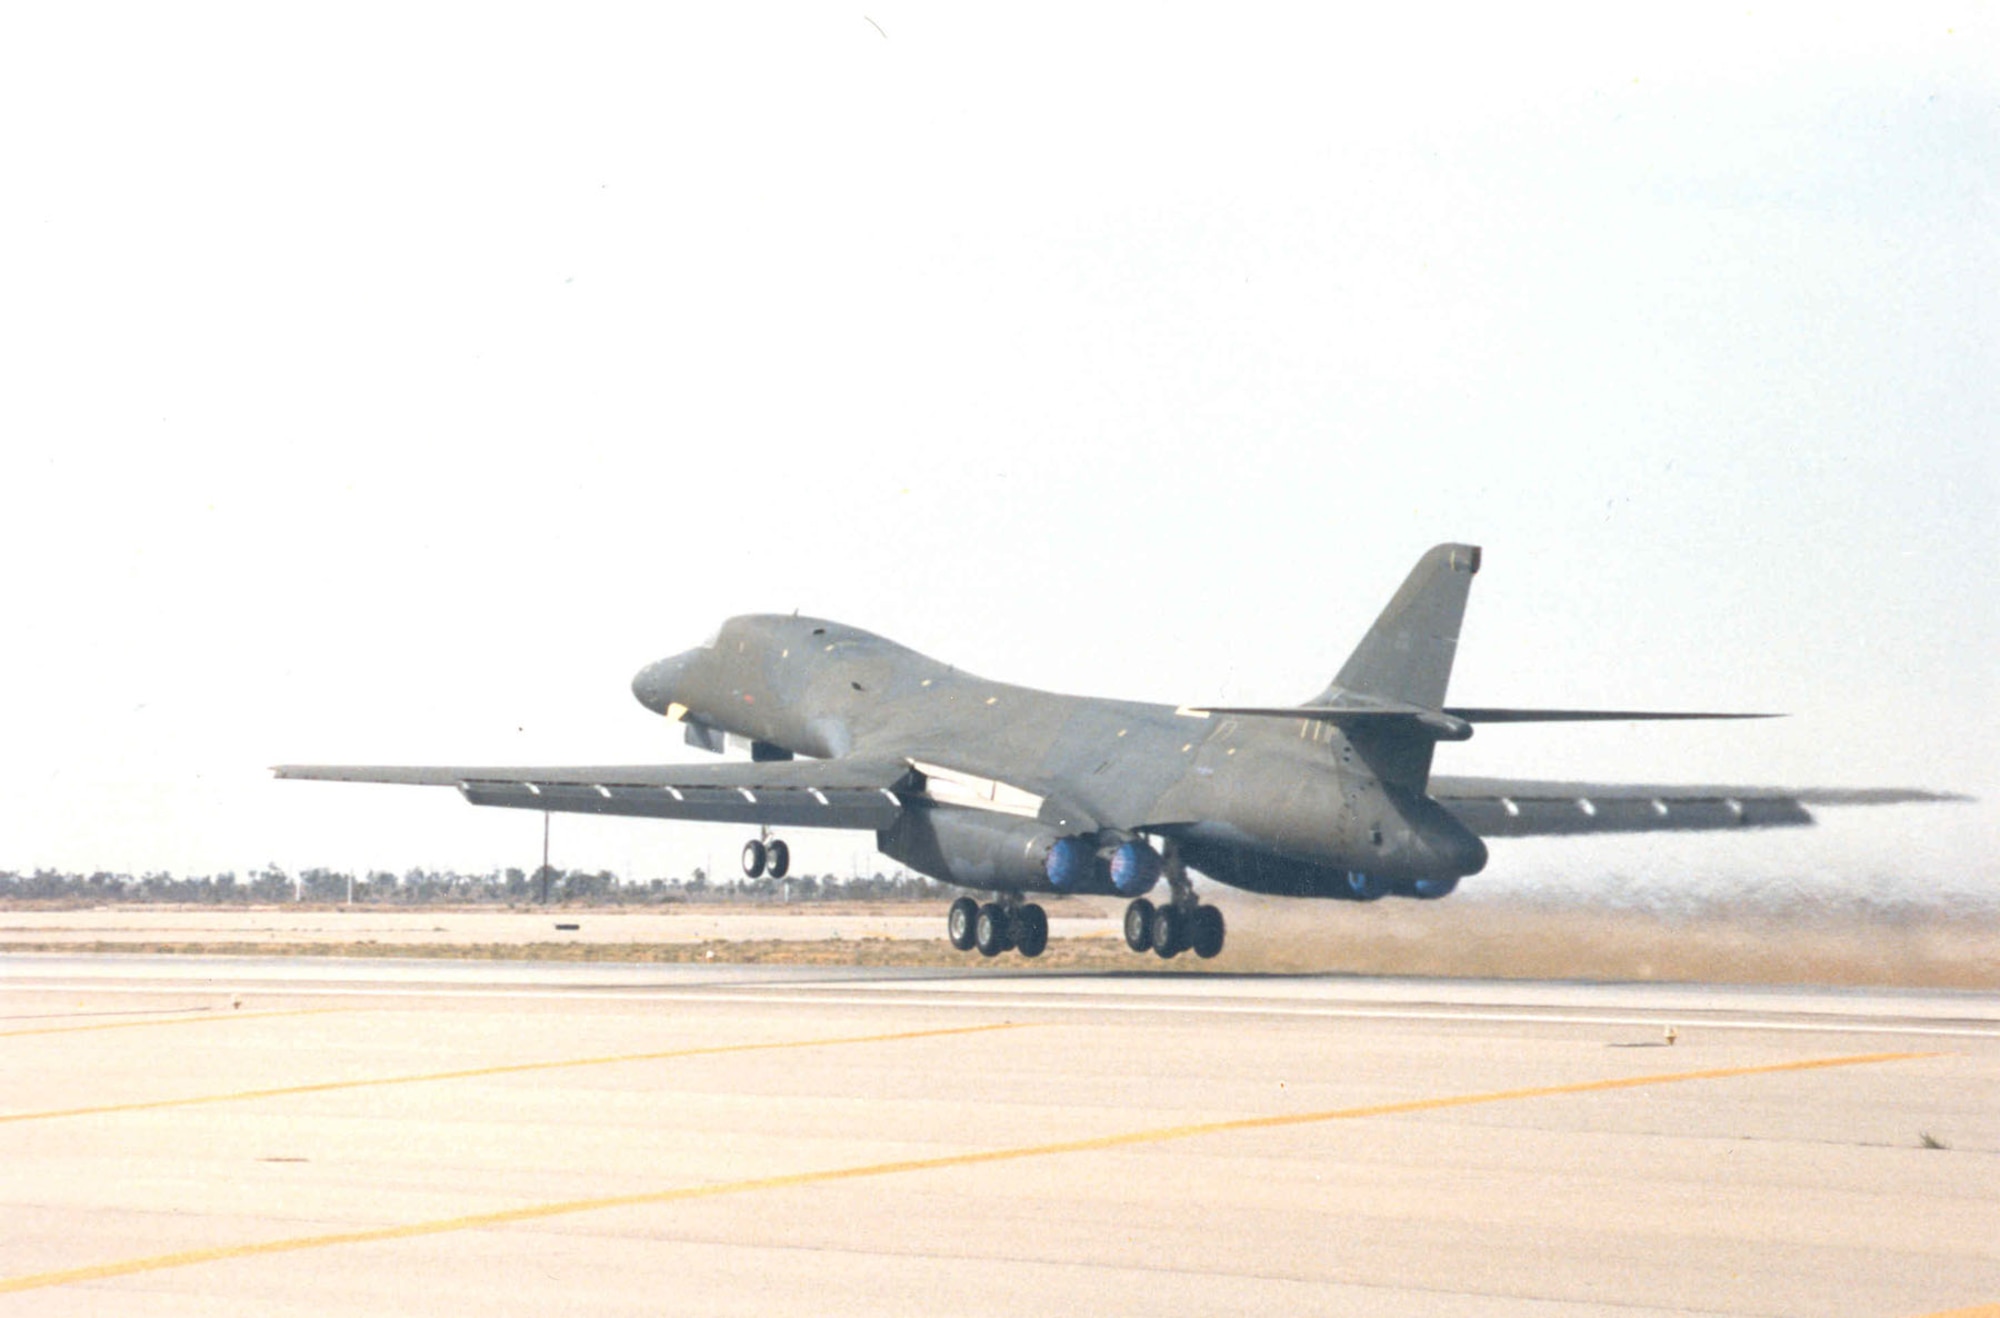 Rockwell International B-1B takeoff on Oct. 25, 1986. Note the lit afterburners. (U.S. Air Force photo)